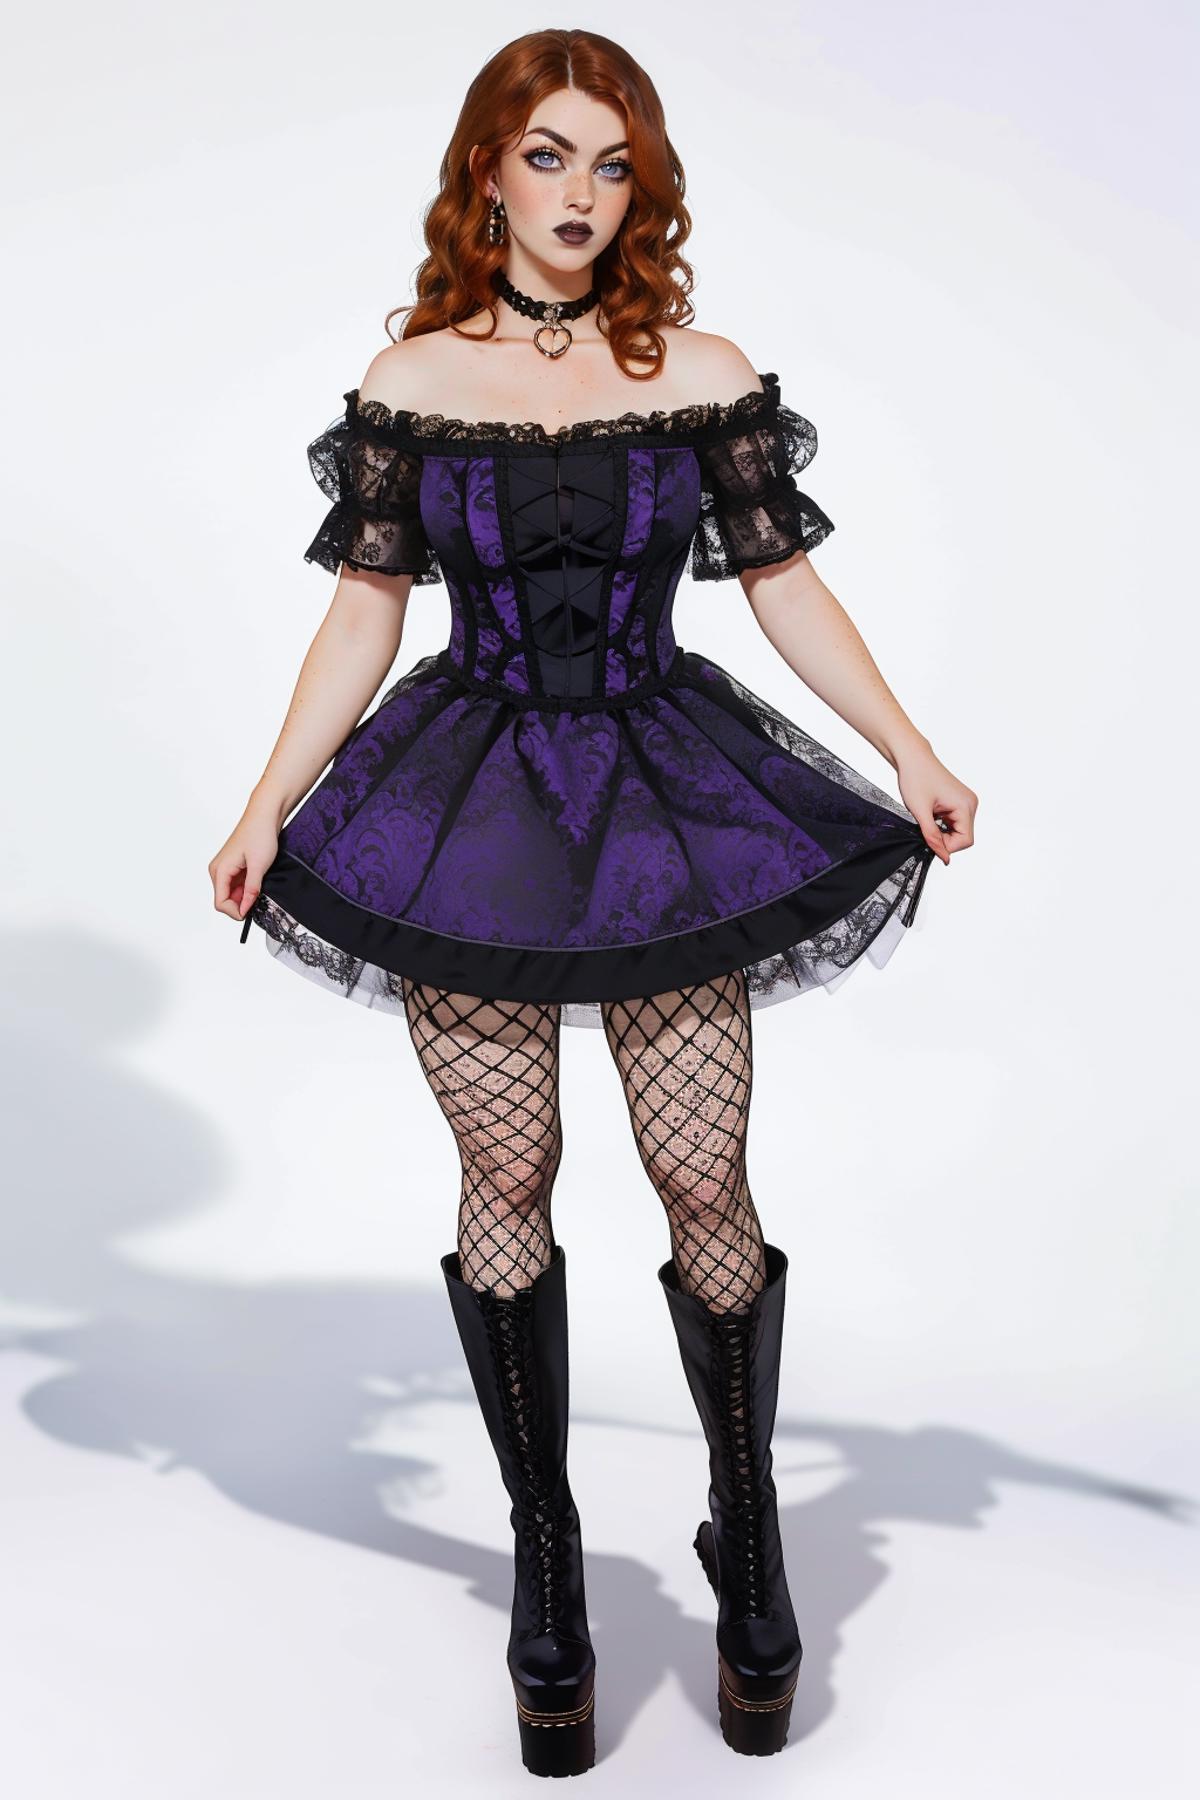 Purple Gothic Lace Dress image by freckledvixon